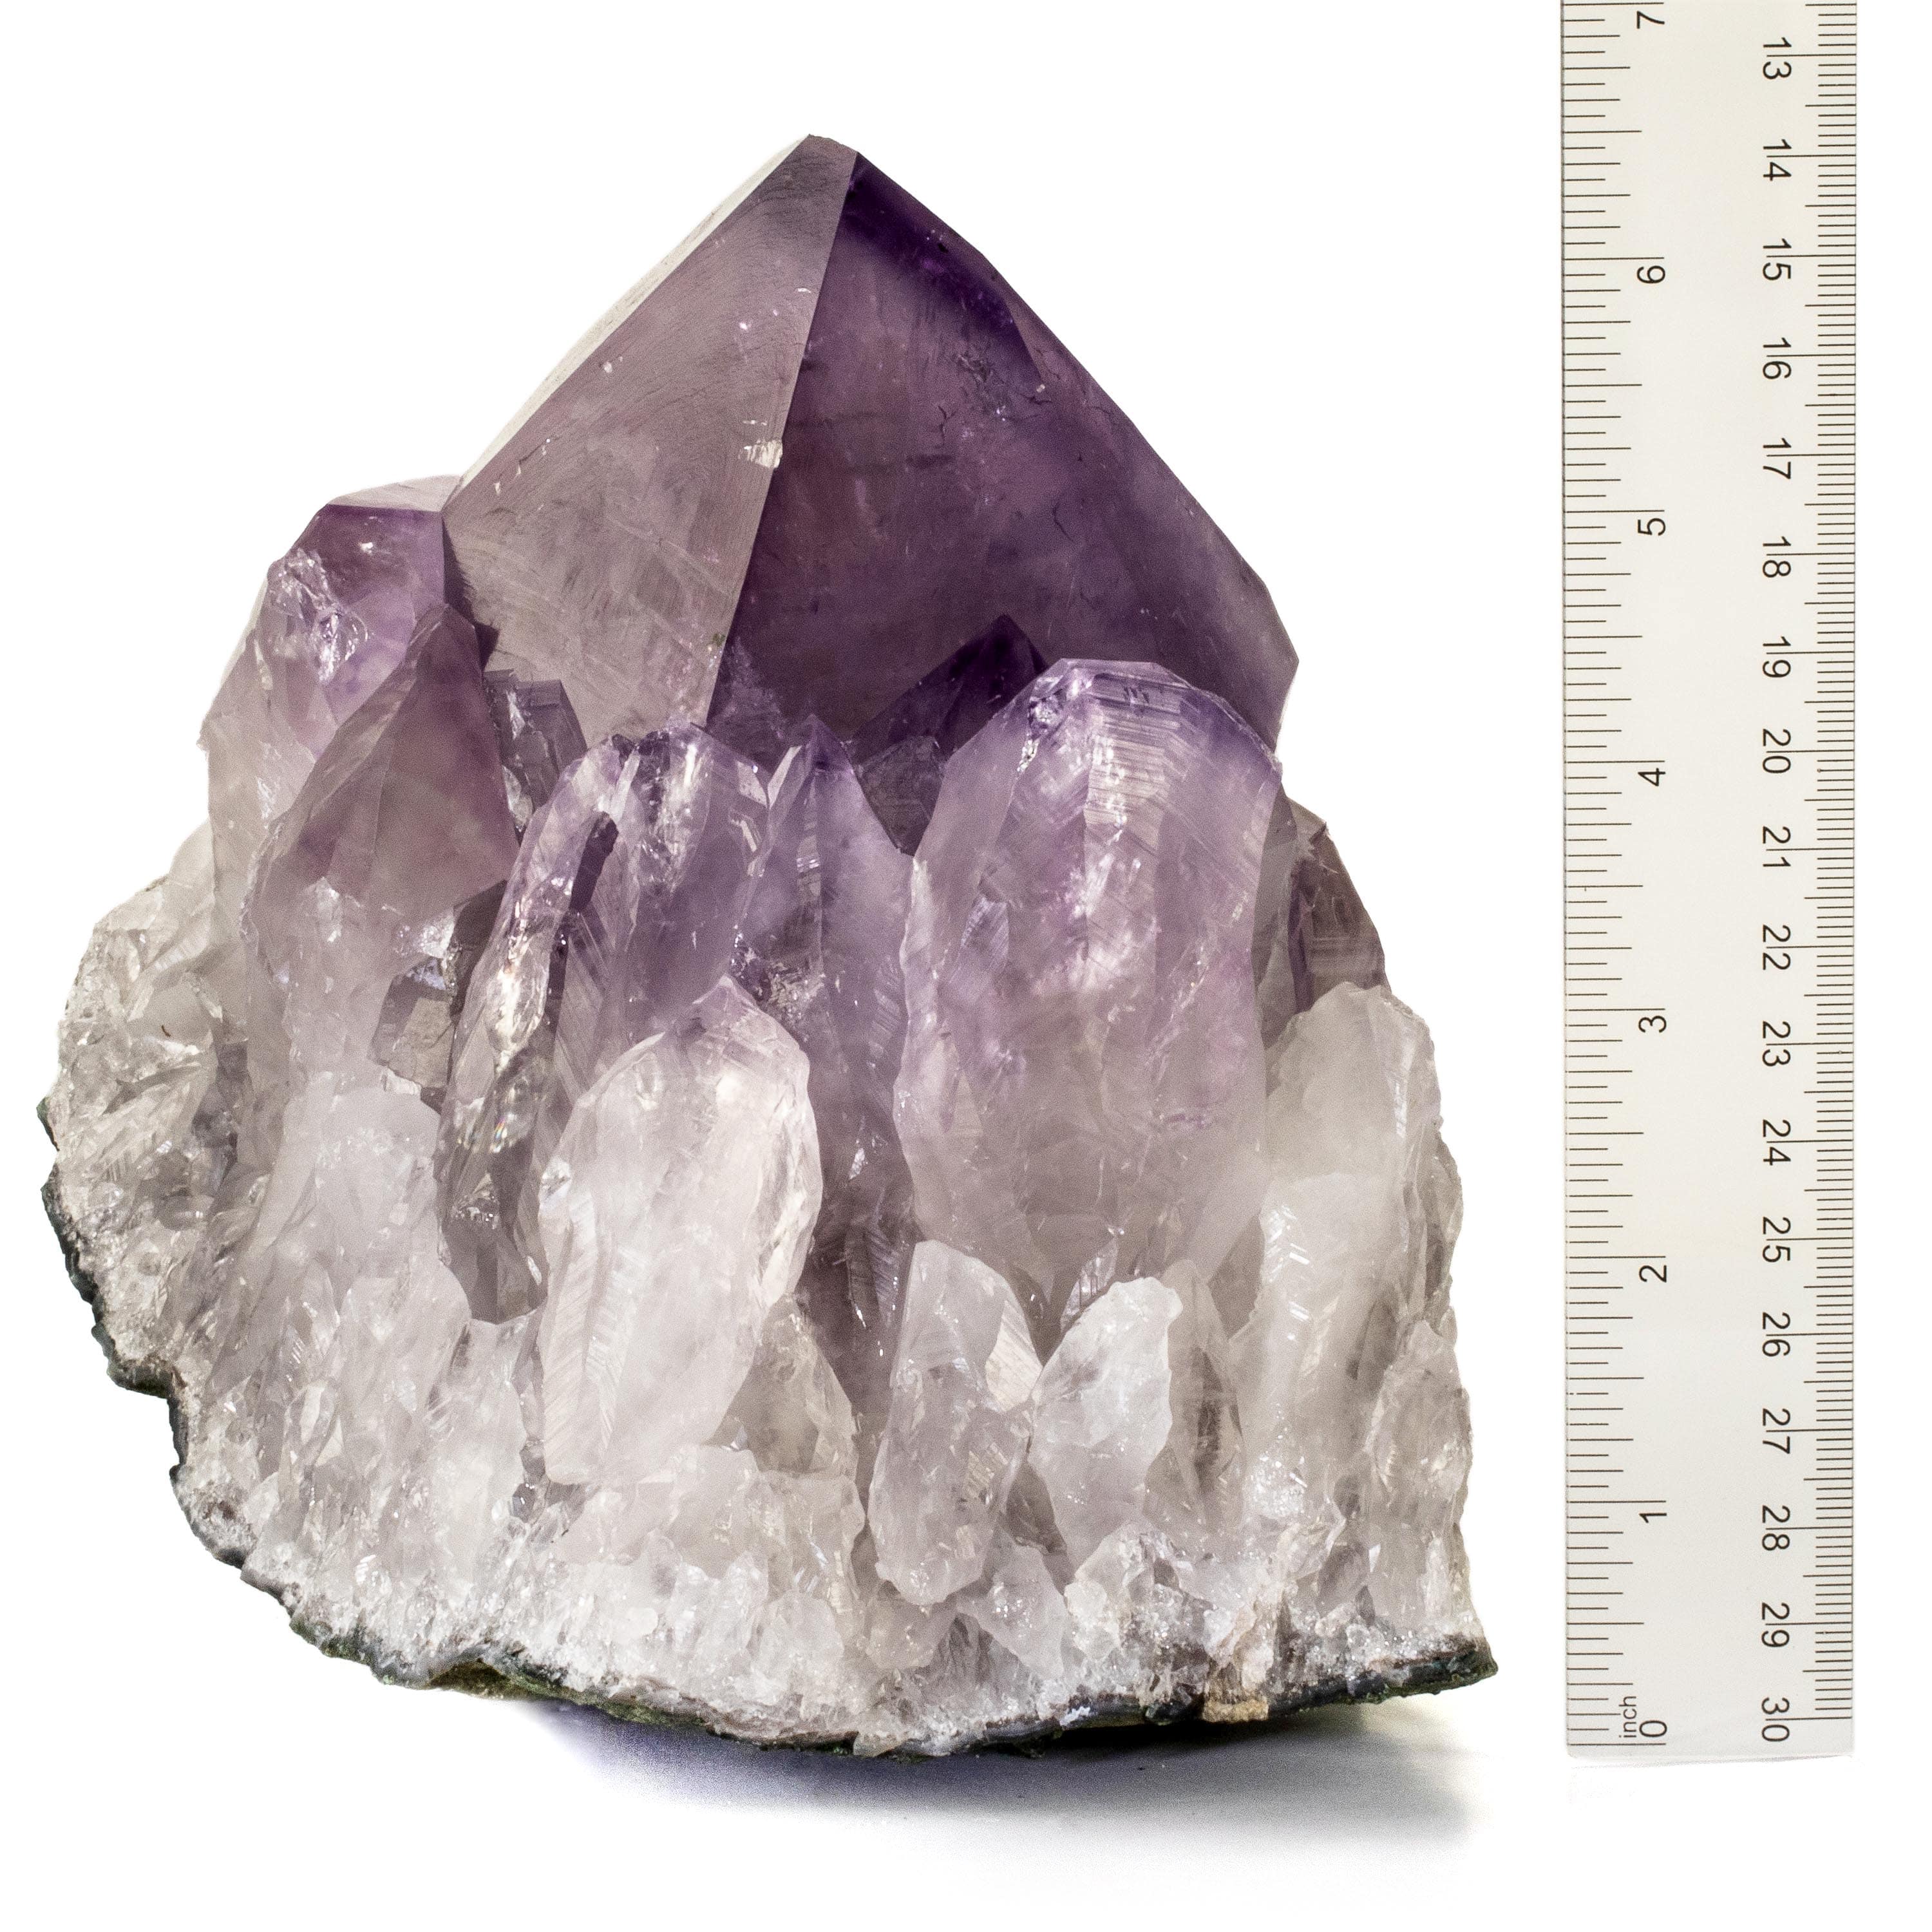 Kalifano Amethyst Amethyst Geode - 7 in. / 11 lbs BAG2400.018